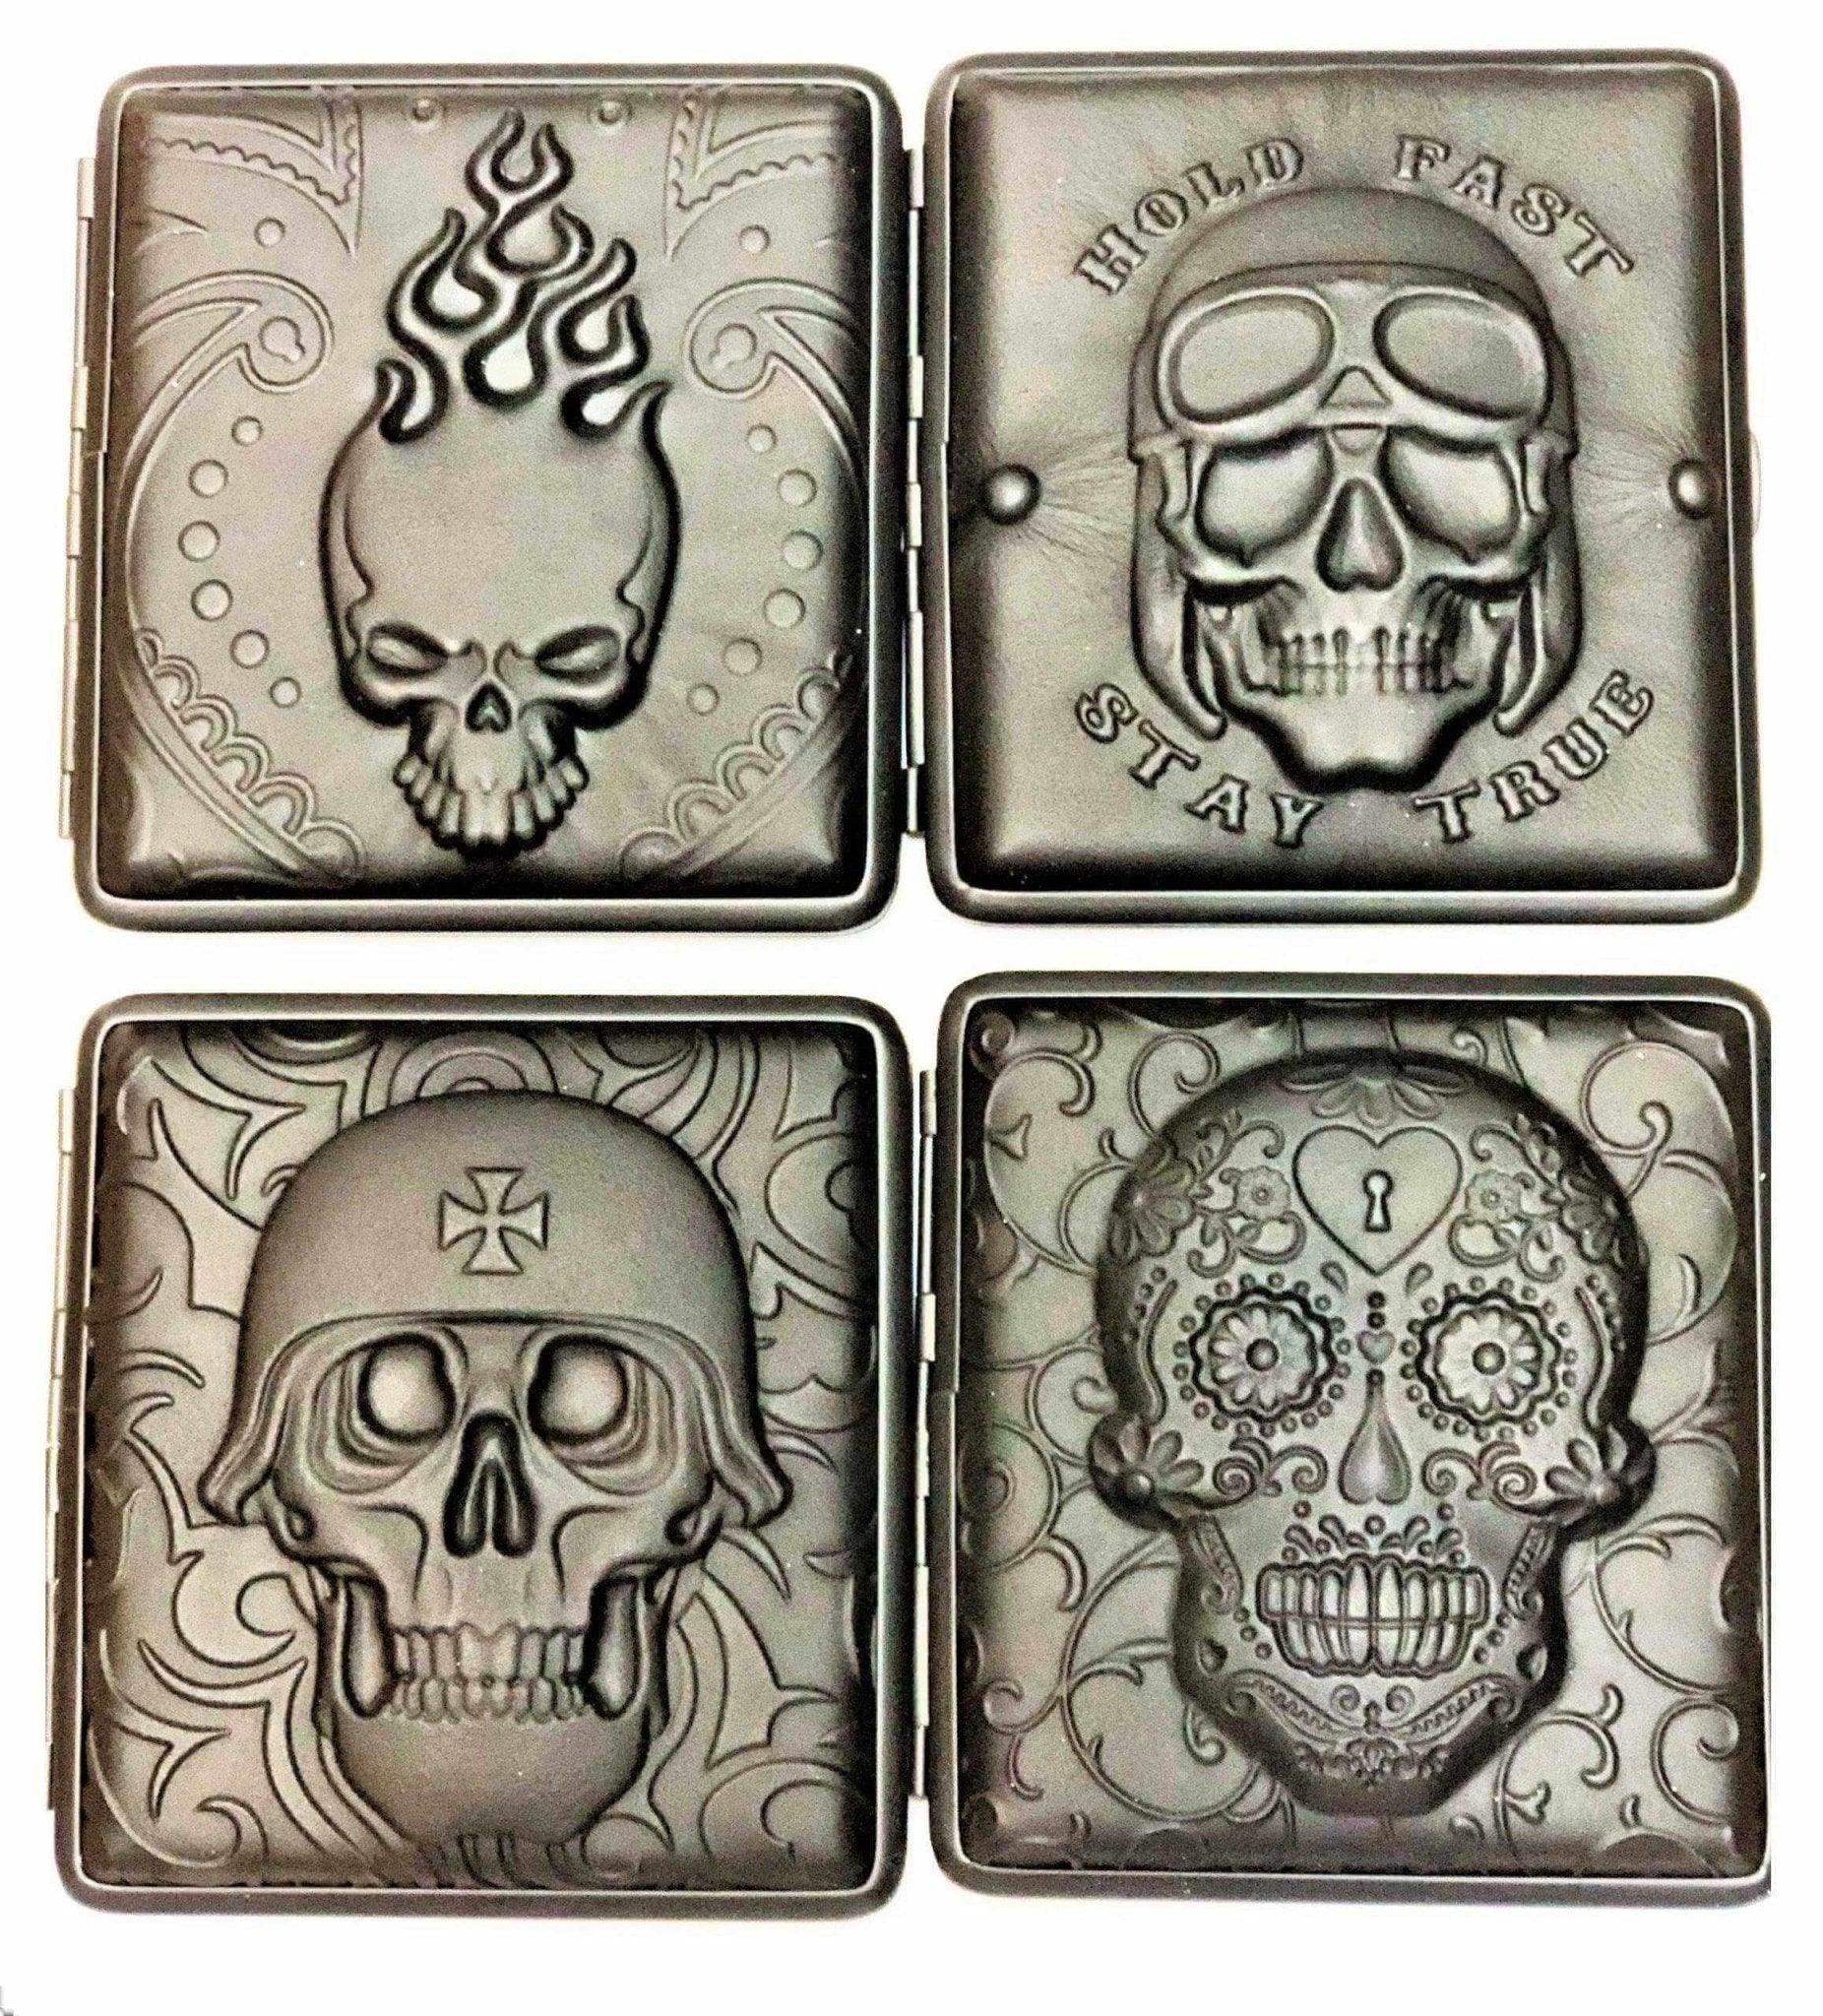 3D Skull Designs Cigarette Hard Case Tobacco Storage - Best Bongs And More